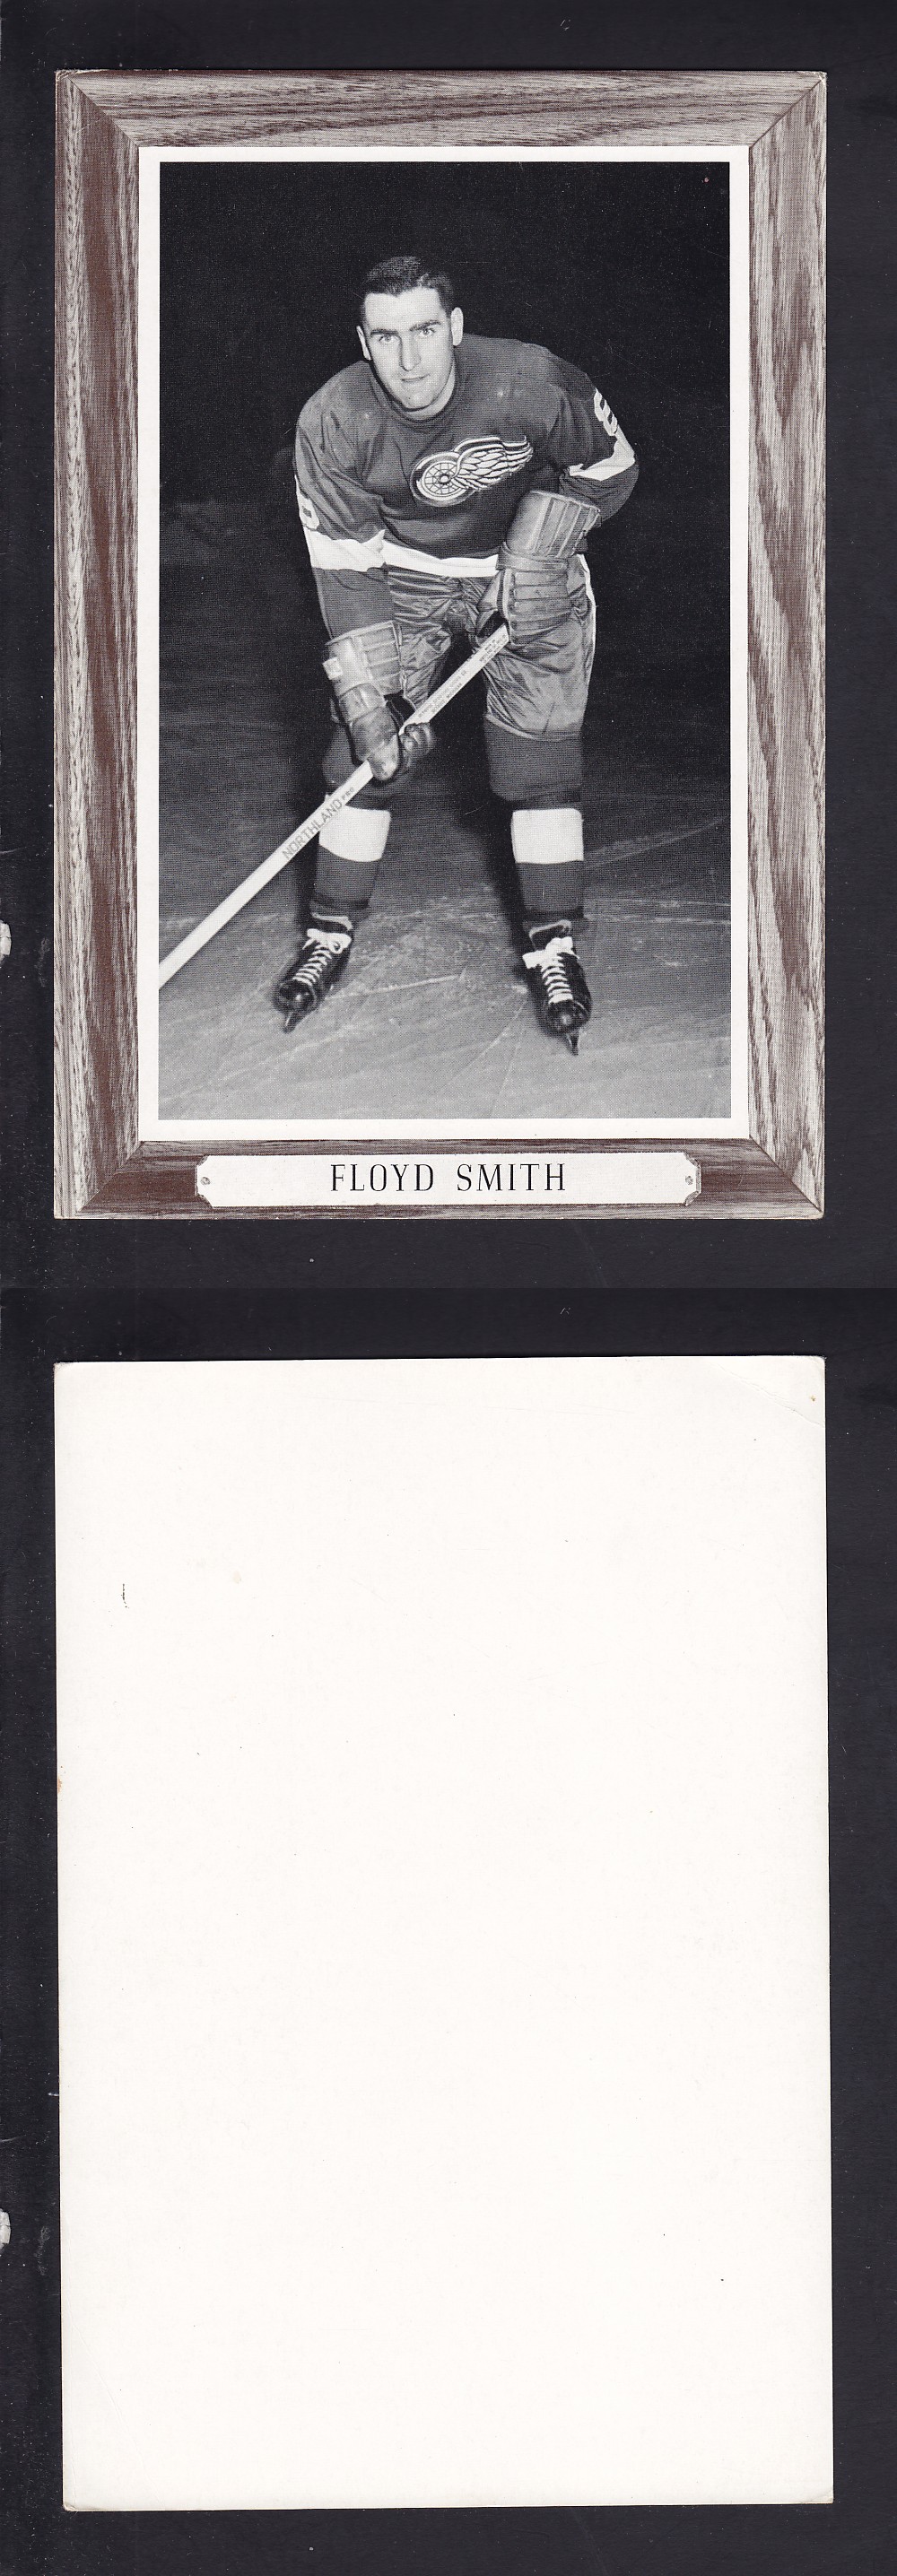 1964-67 BEEHIVE PHOTO GR. 3 F. SMITH photo